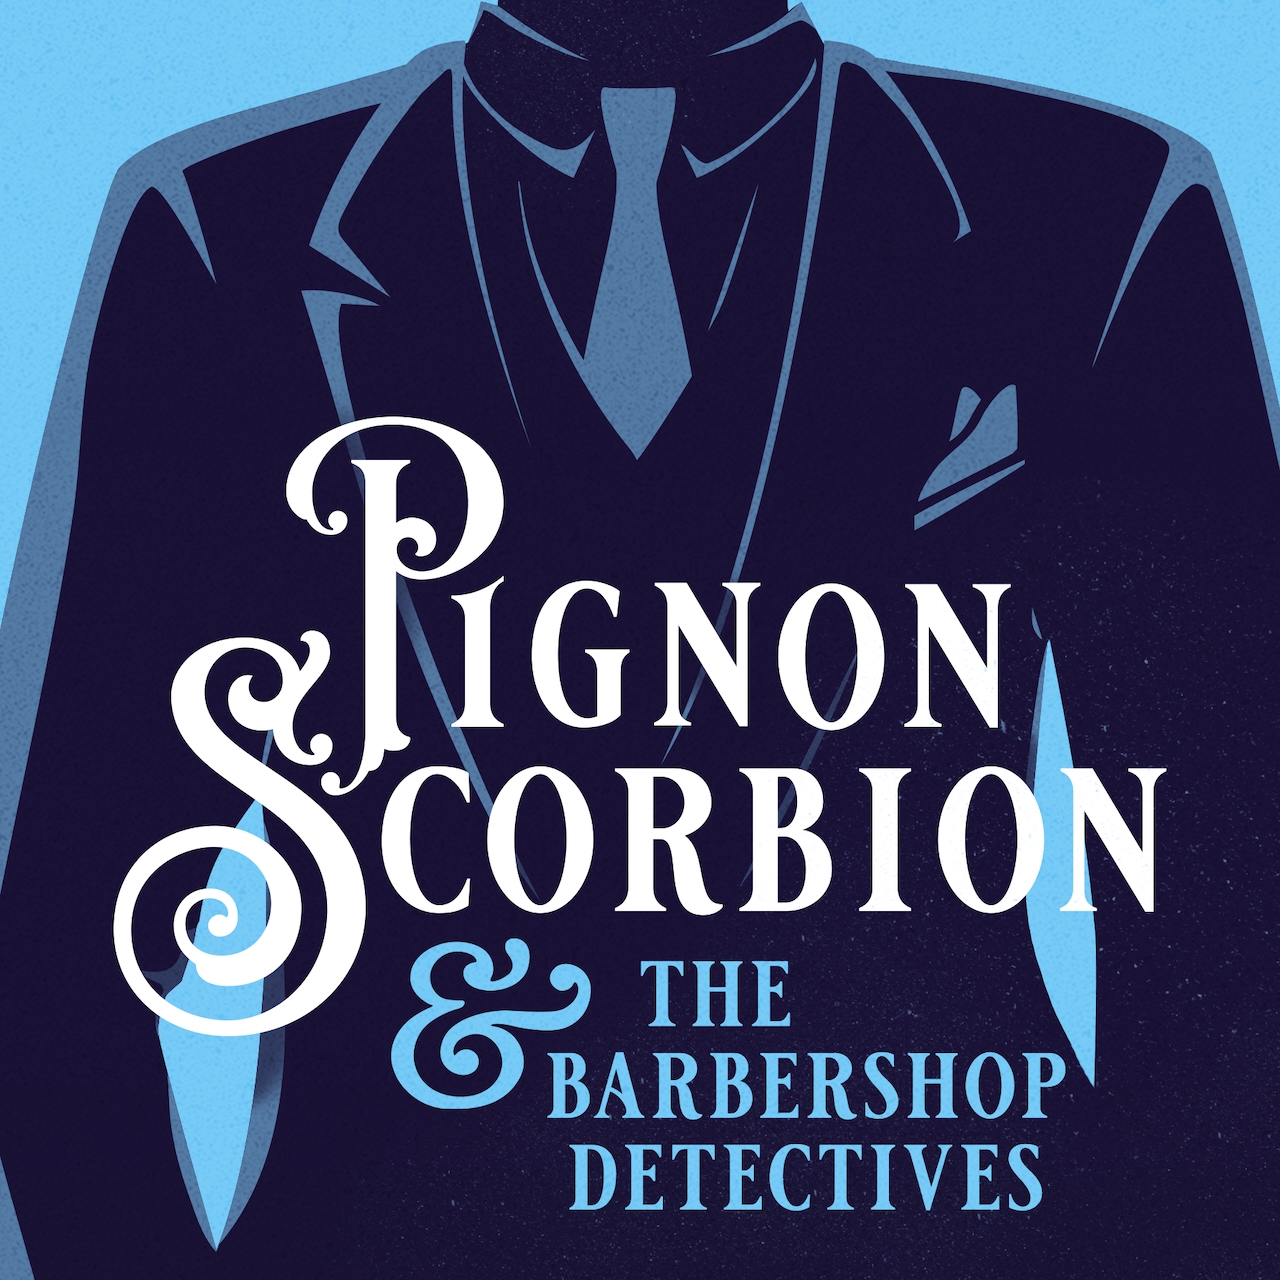 Pignon Scorbion & The Barbershop Detectives (Blackstone Publishing, Feb 8, 2022) features a new Police Chief Inspector (Pignon Scorbion) who solves crimes from a 1910 Downton Abbey-era barbershop.